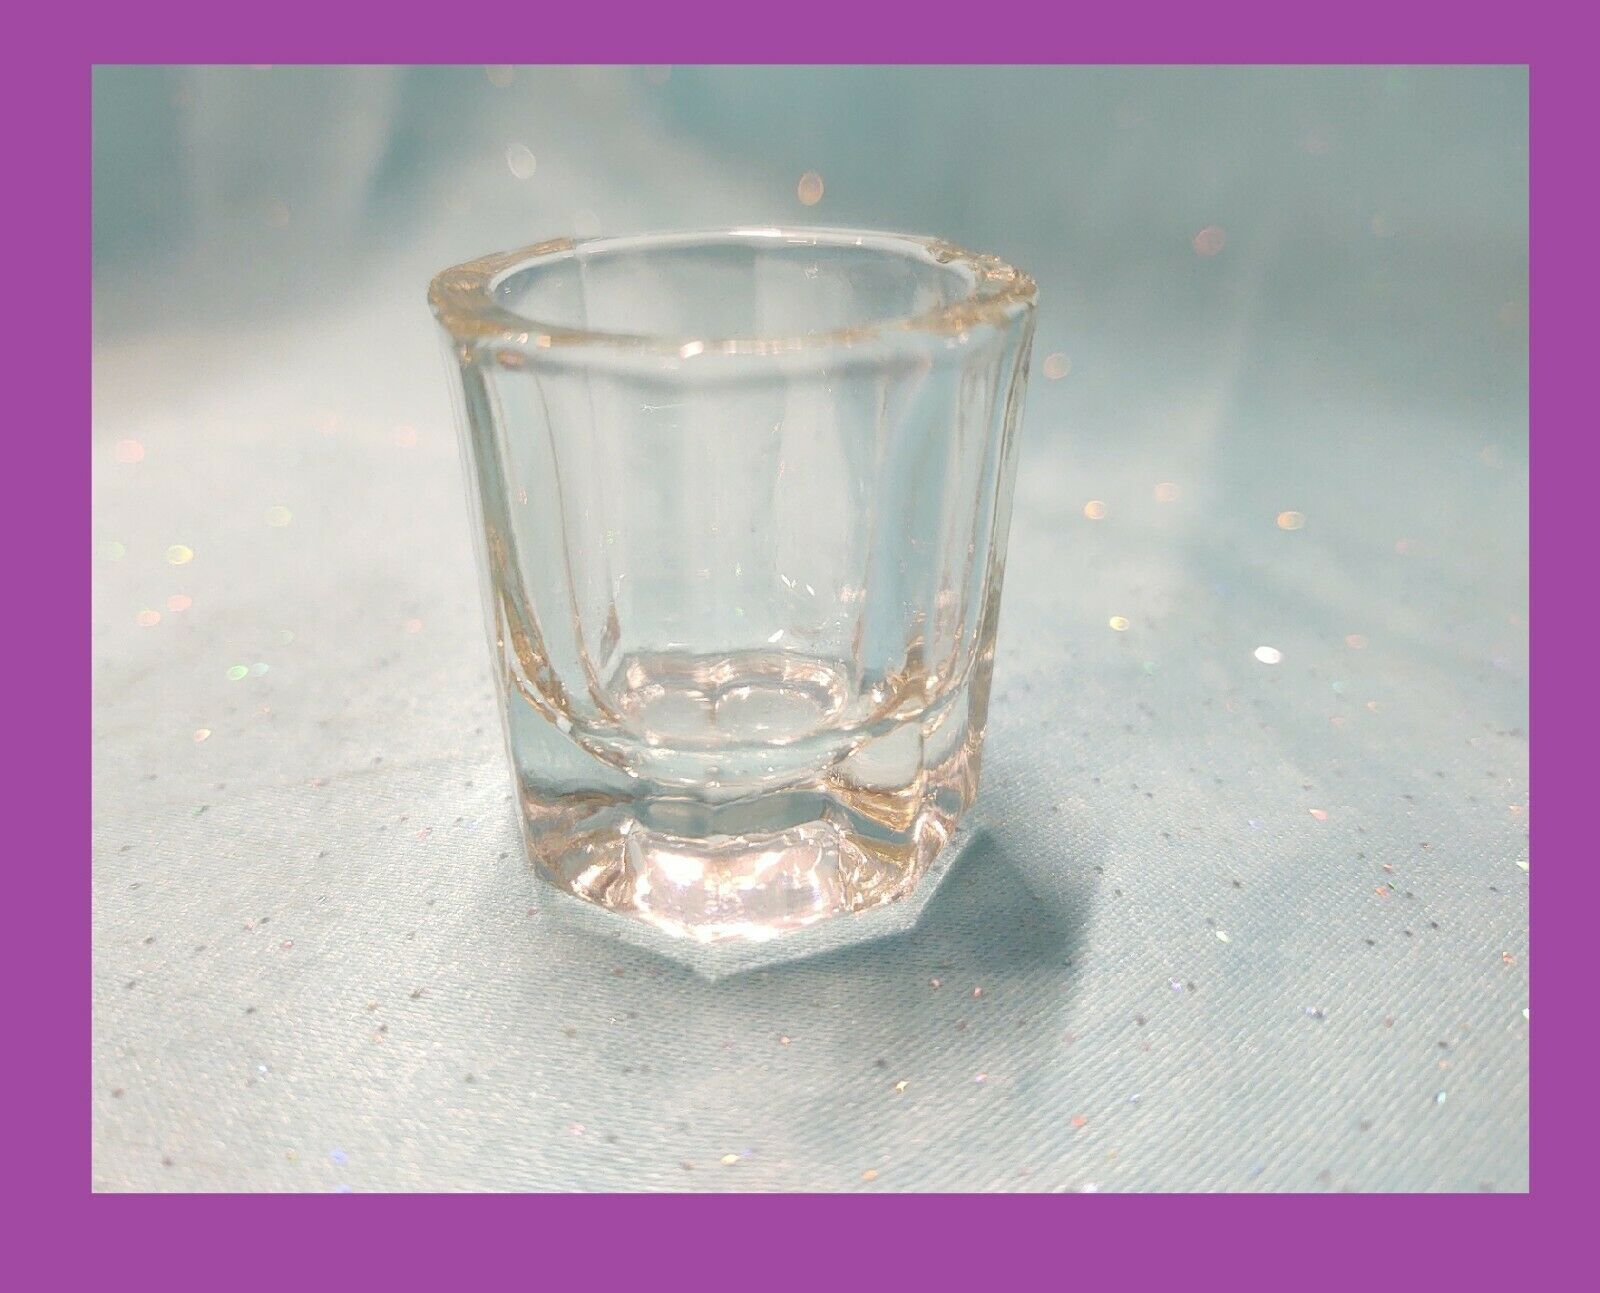 CLEAR GLASS DAPPEN DISH Crystal Cup Nail Art Tools Acrylic Liquid Powder Acetone